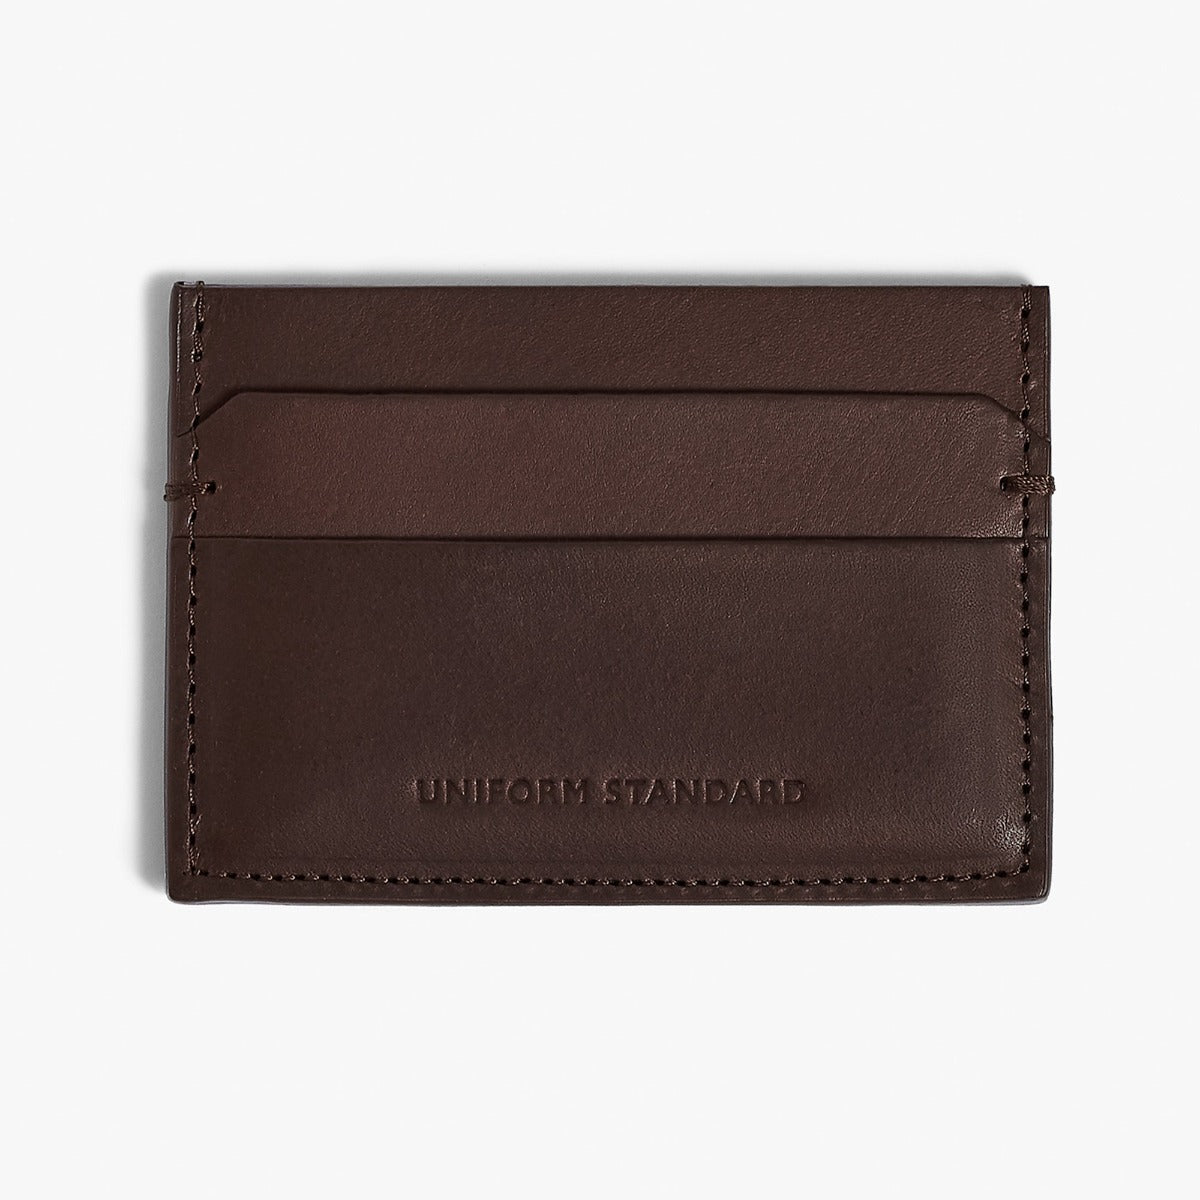 Leather Cardholder Espresso - UNIFORM STANDARD